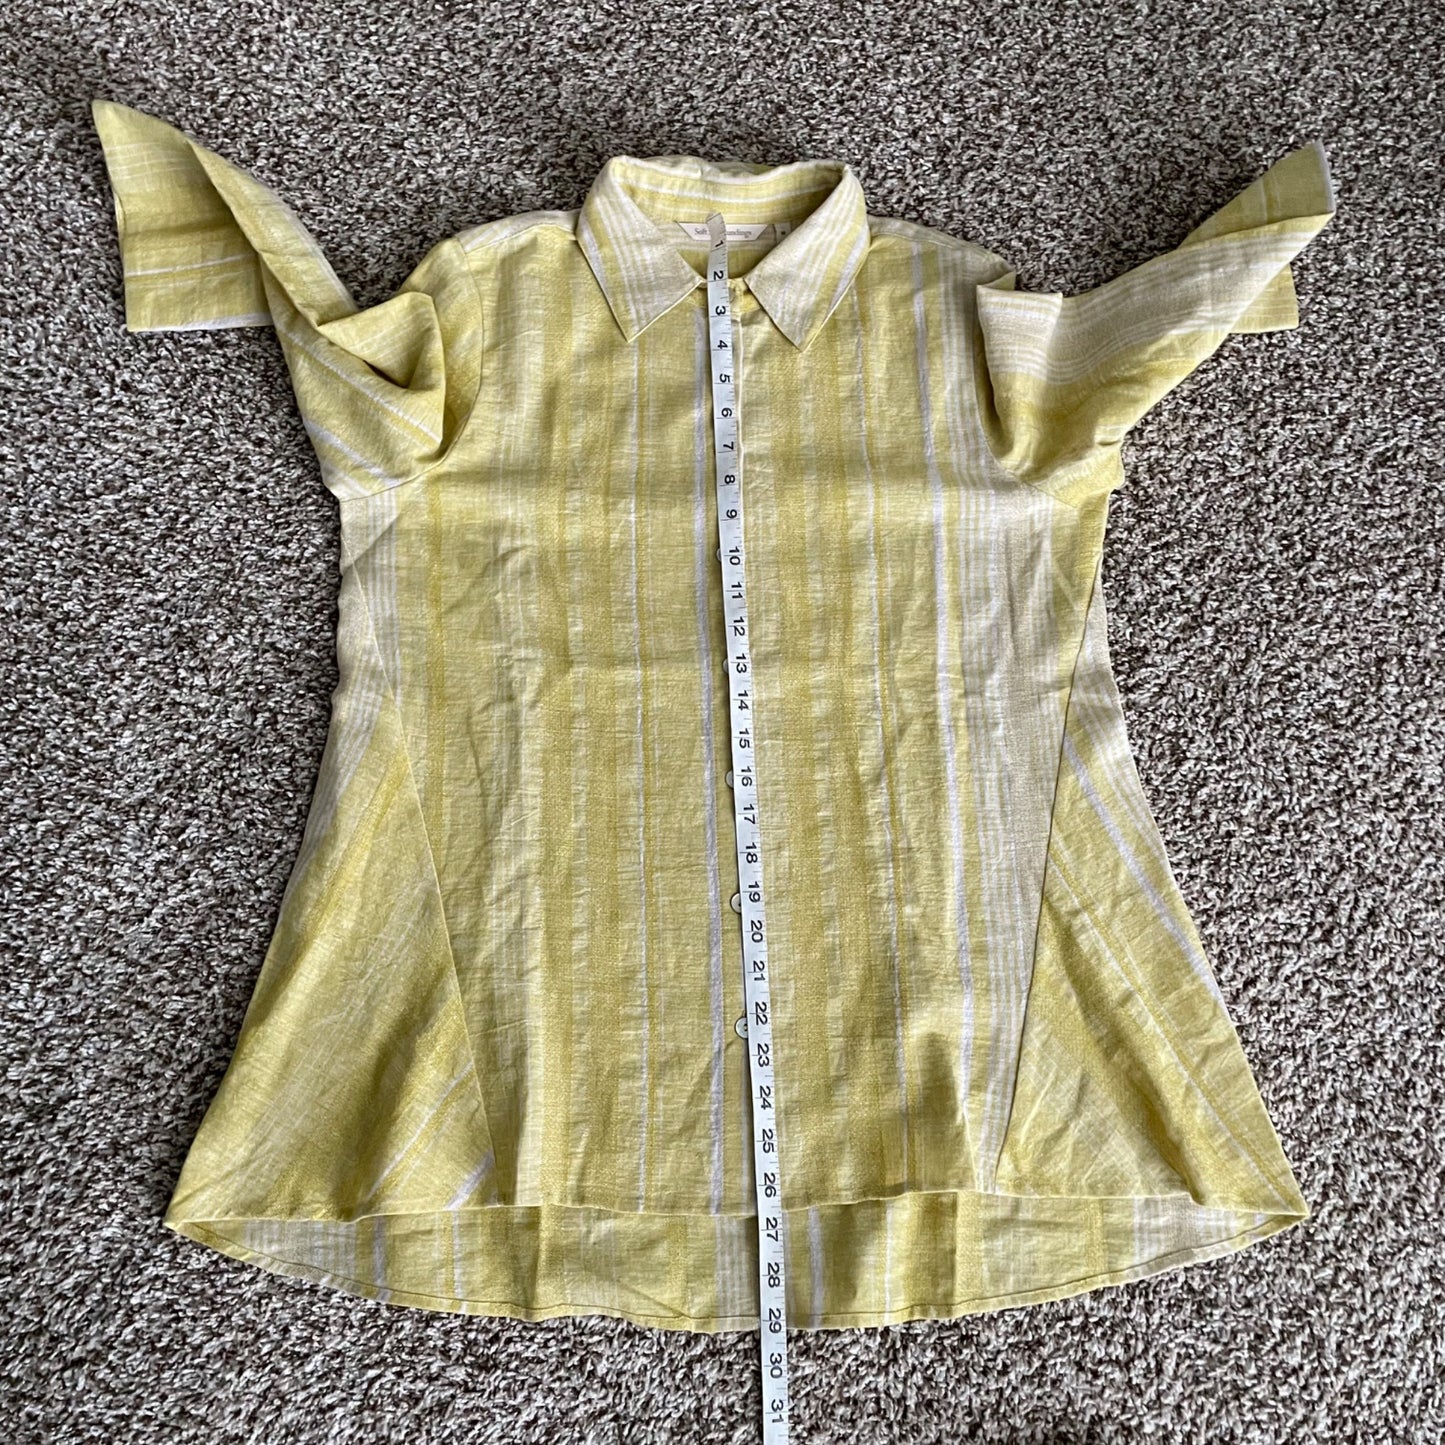 NWOT Soft Surroundings Livienne Linen Yellow Striped Shirt Women's Size Medium